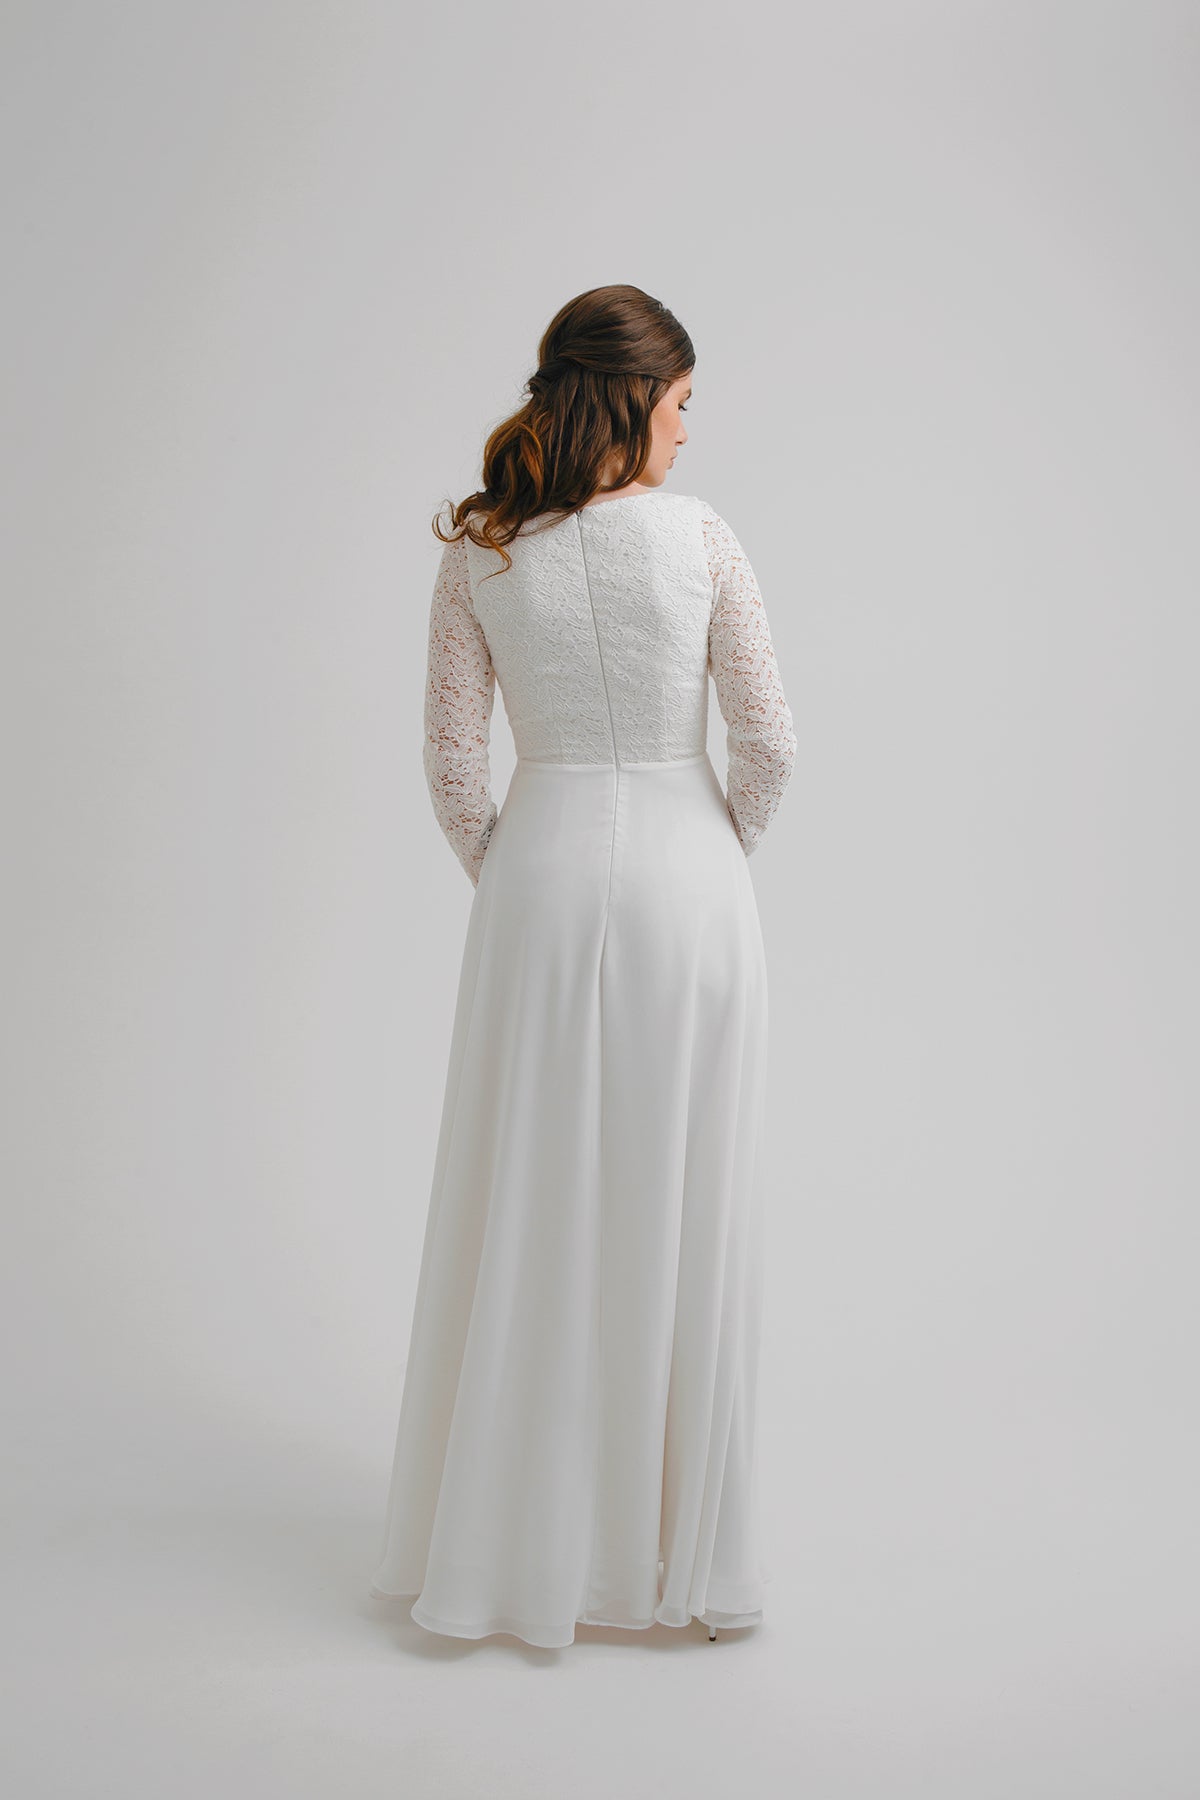 Lace wedding dress • simple wedding dress • long sleeve wedding dress • minimalist wedding dress • elegant bridal gown • modest wedding dress